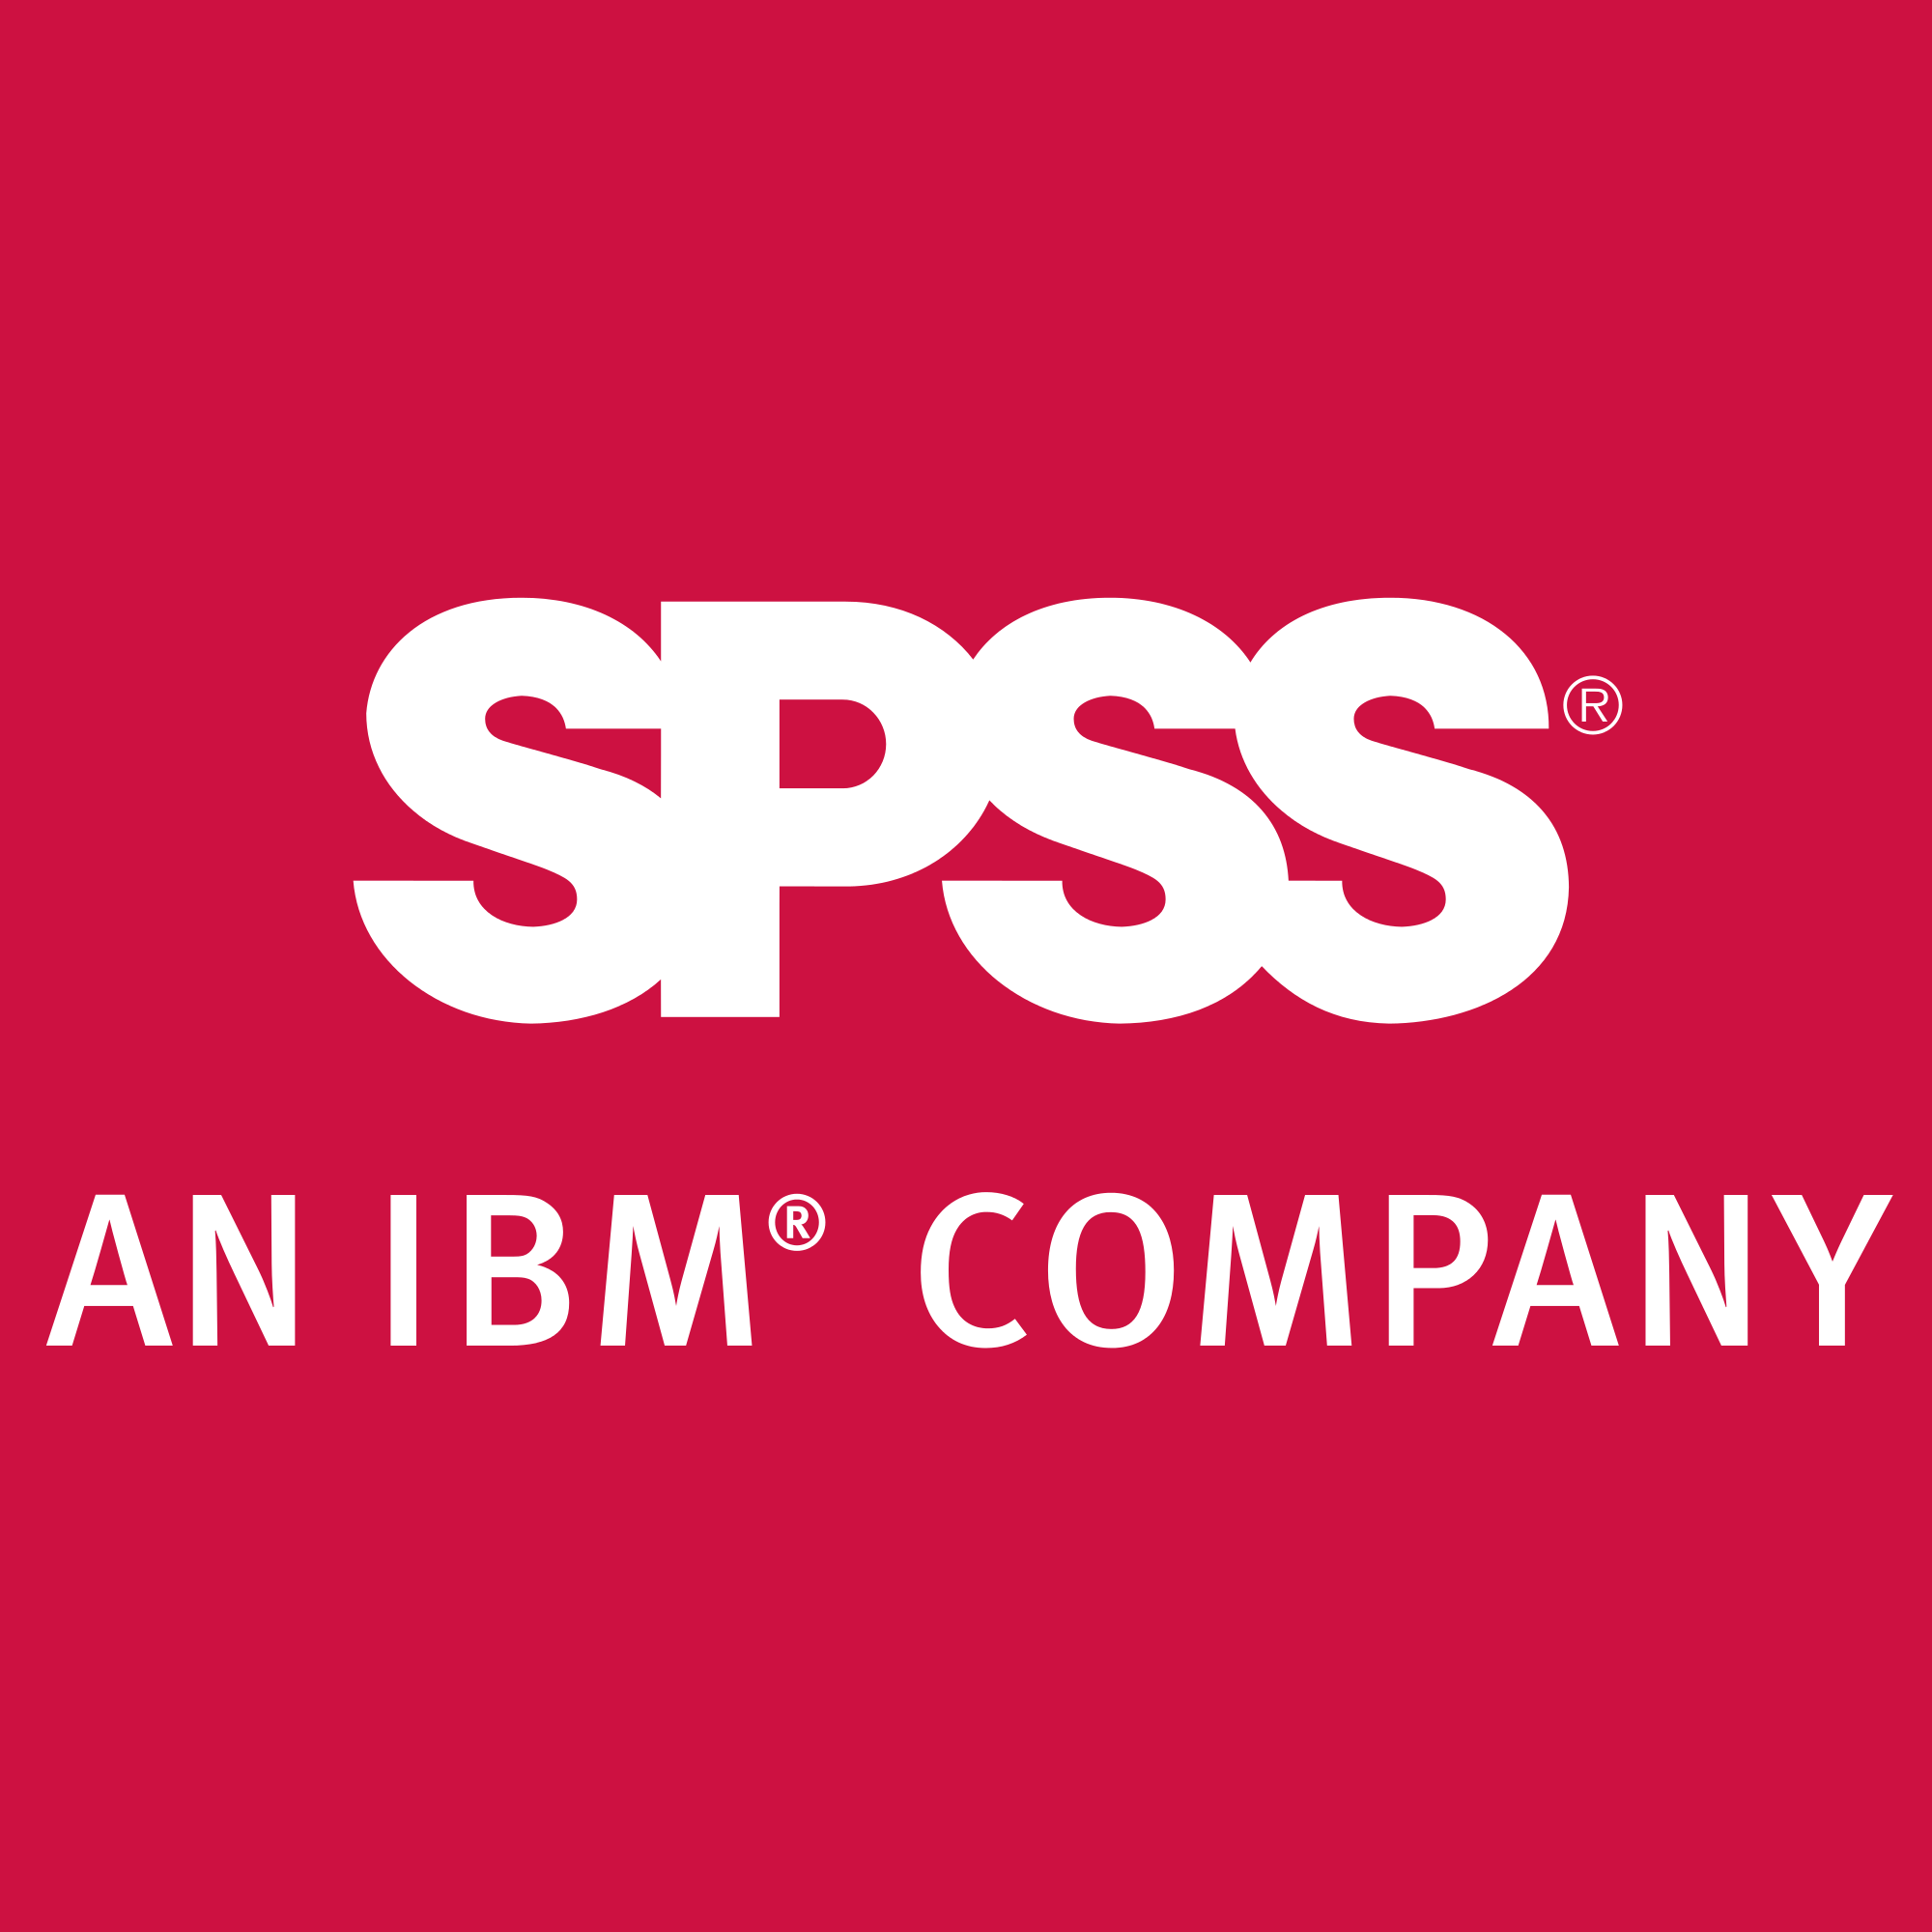 IBM Company Logo - SPSS An IBM Company logo.svg